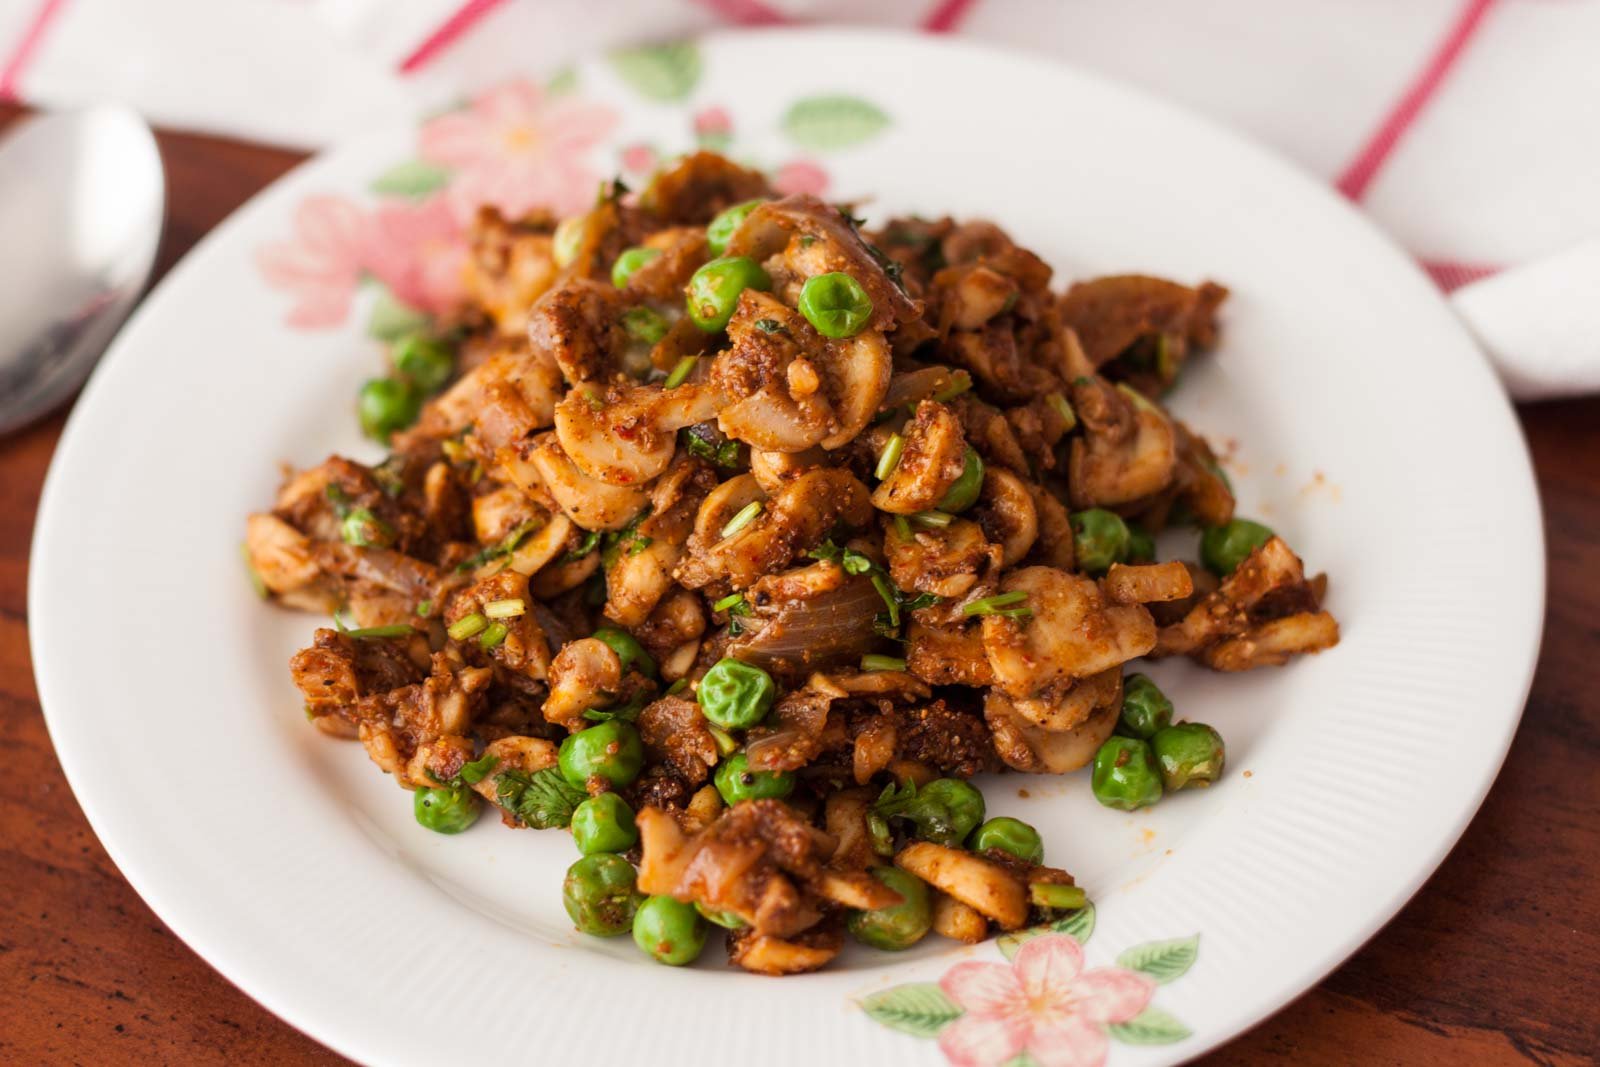 Chettinad Mushroom And Green Peas Stir Fry Recipe 